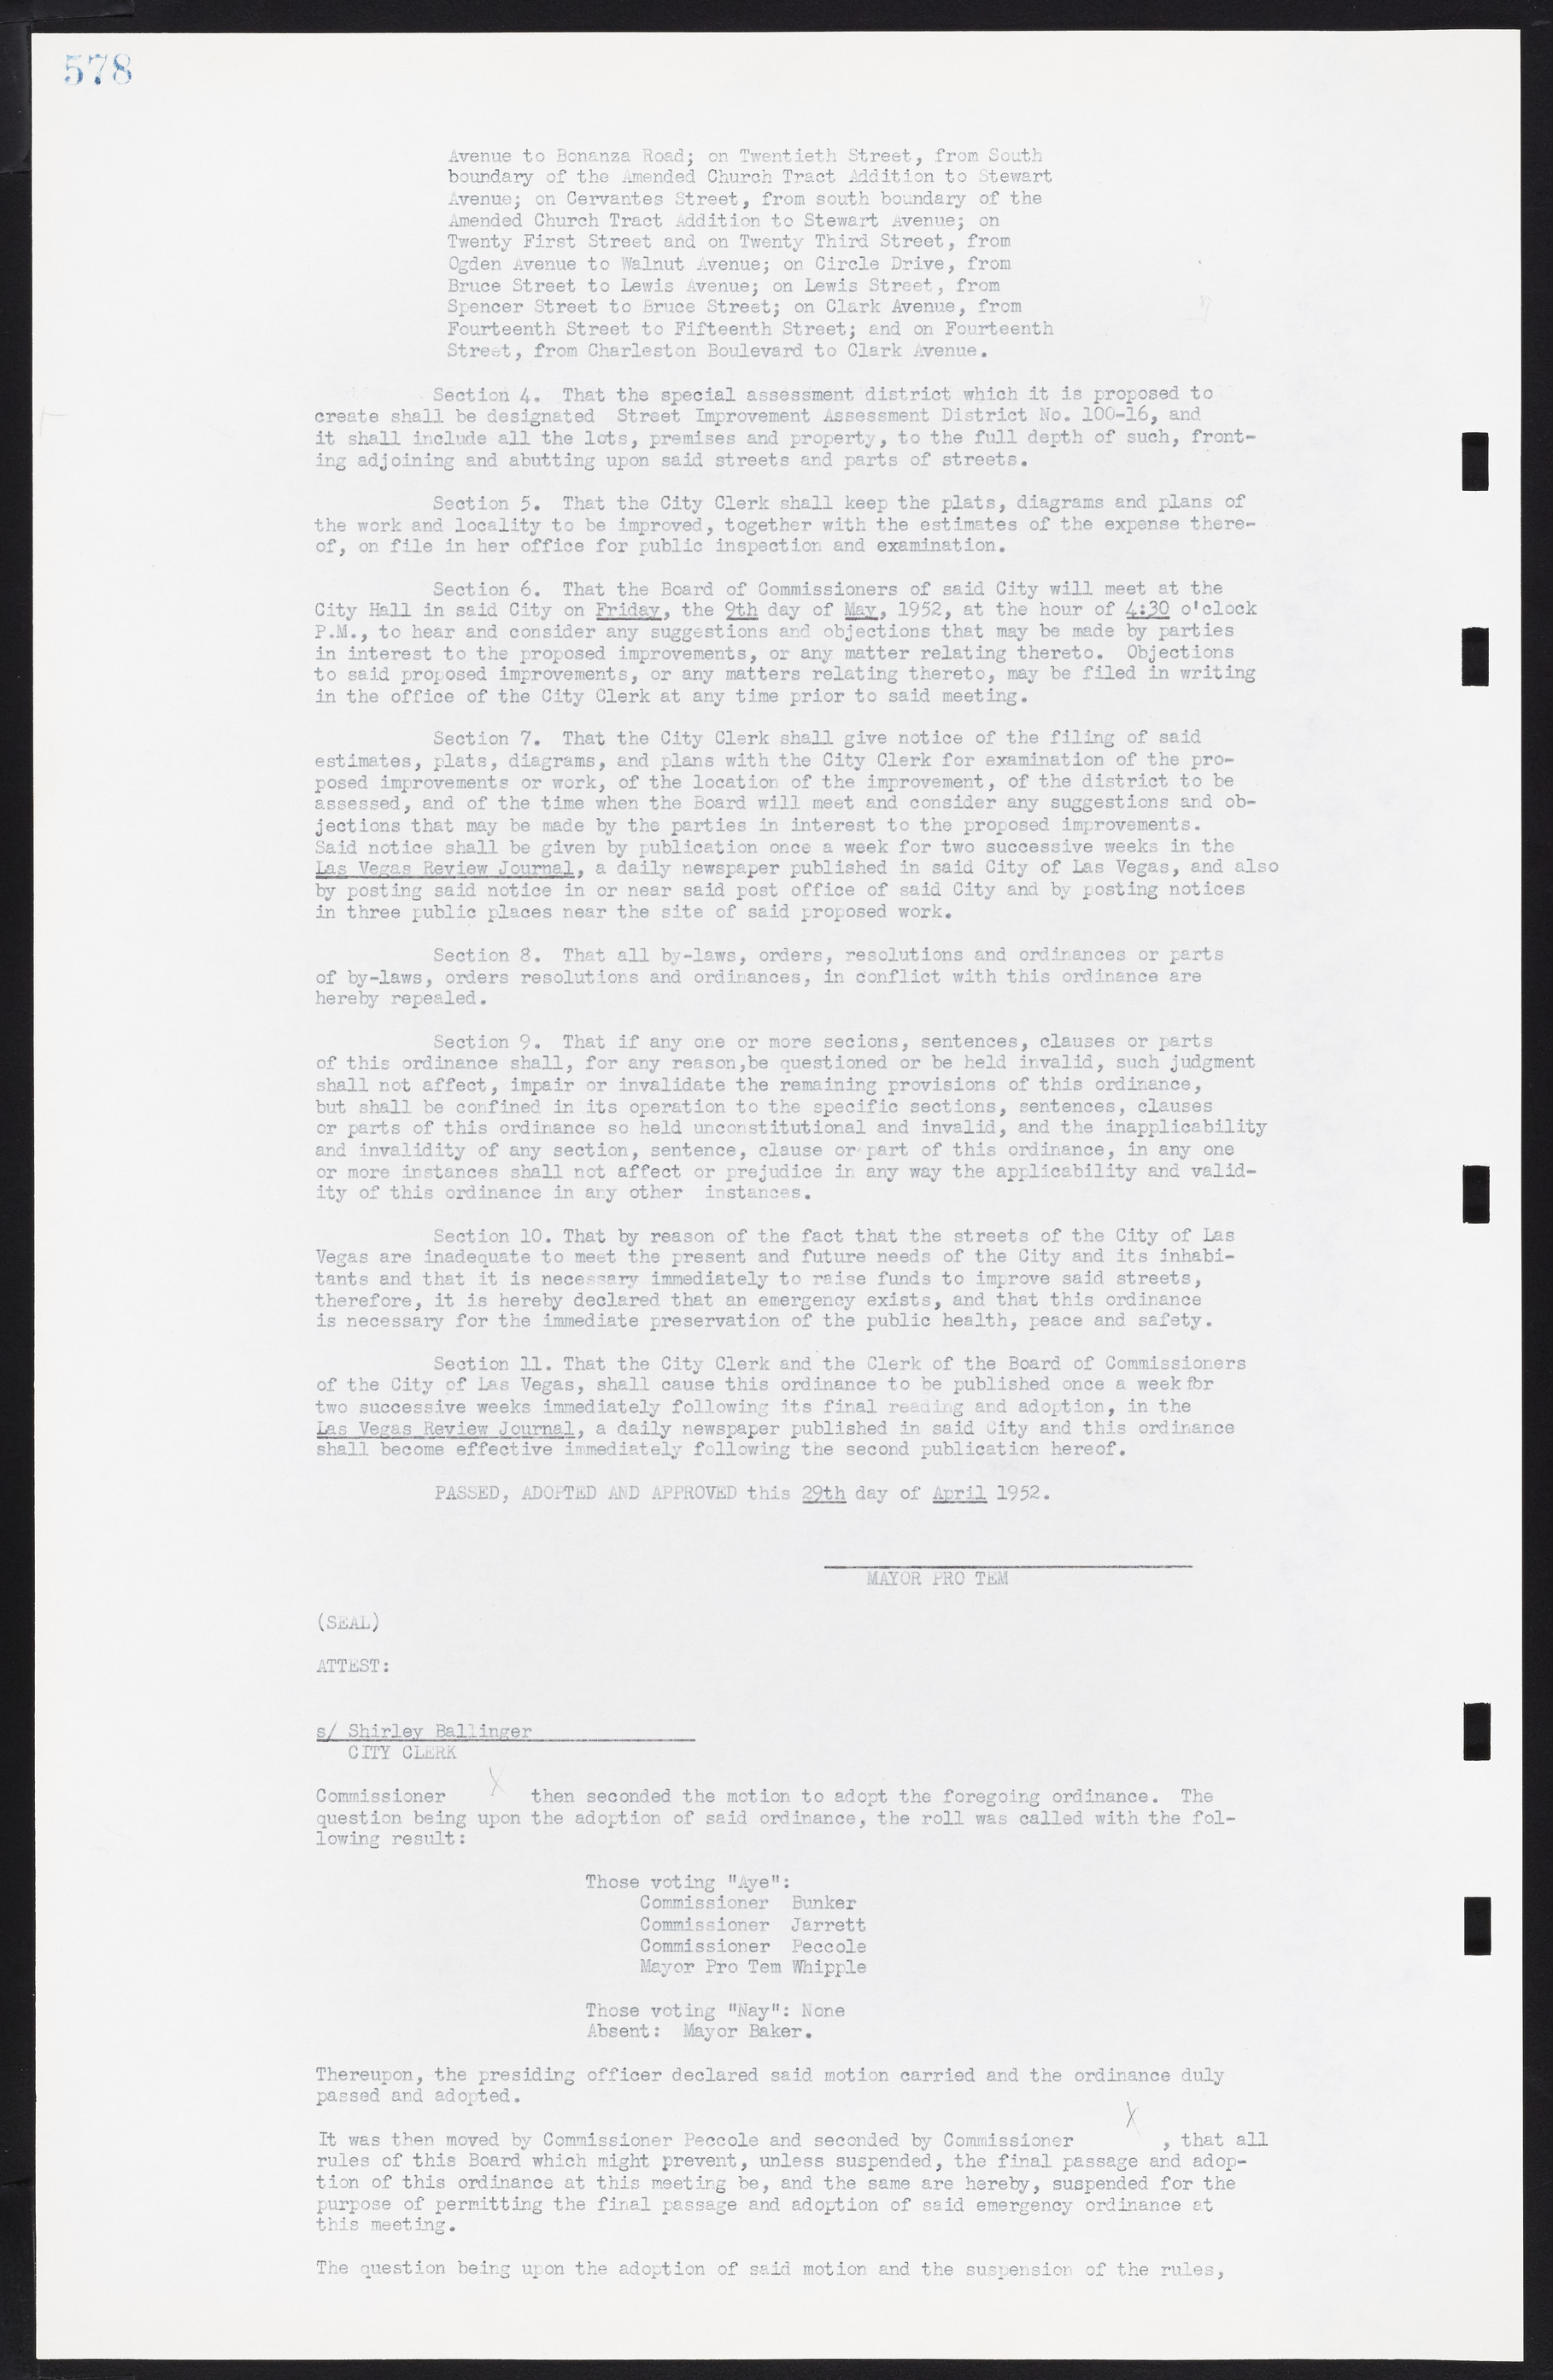 Las Vegas City Commission Minutes, November 7, 1949 to May 21, 1952, lvc000007-596